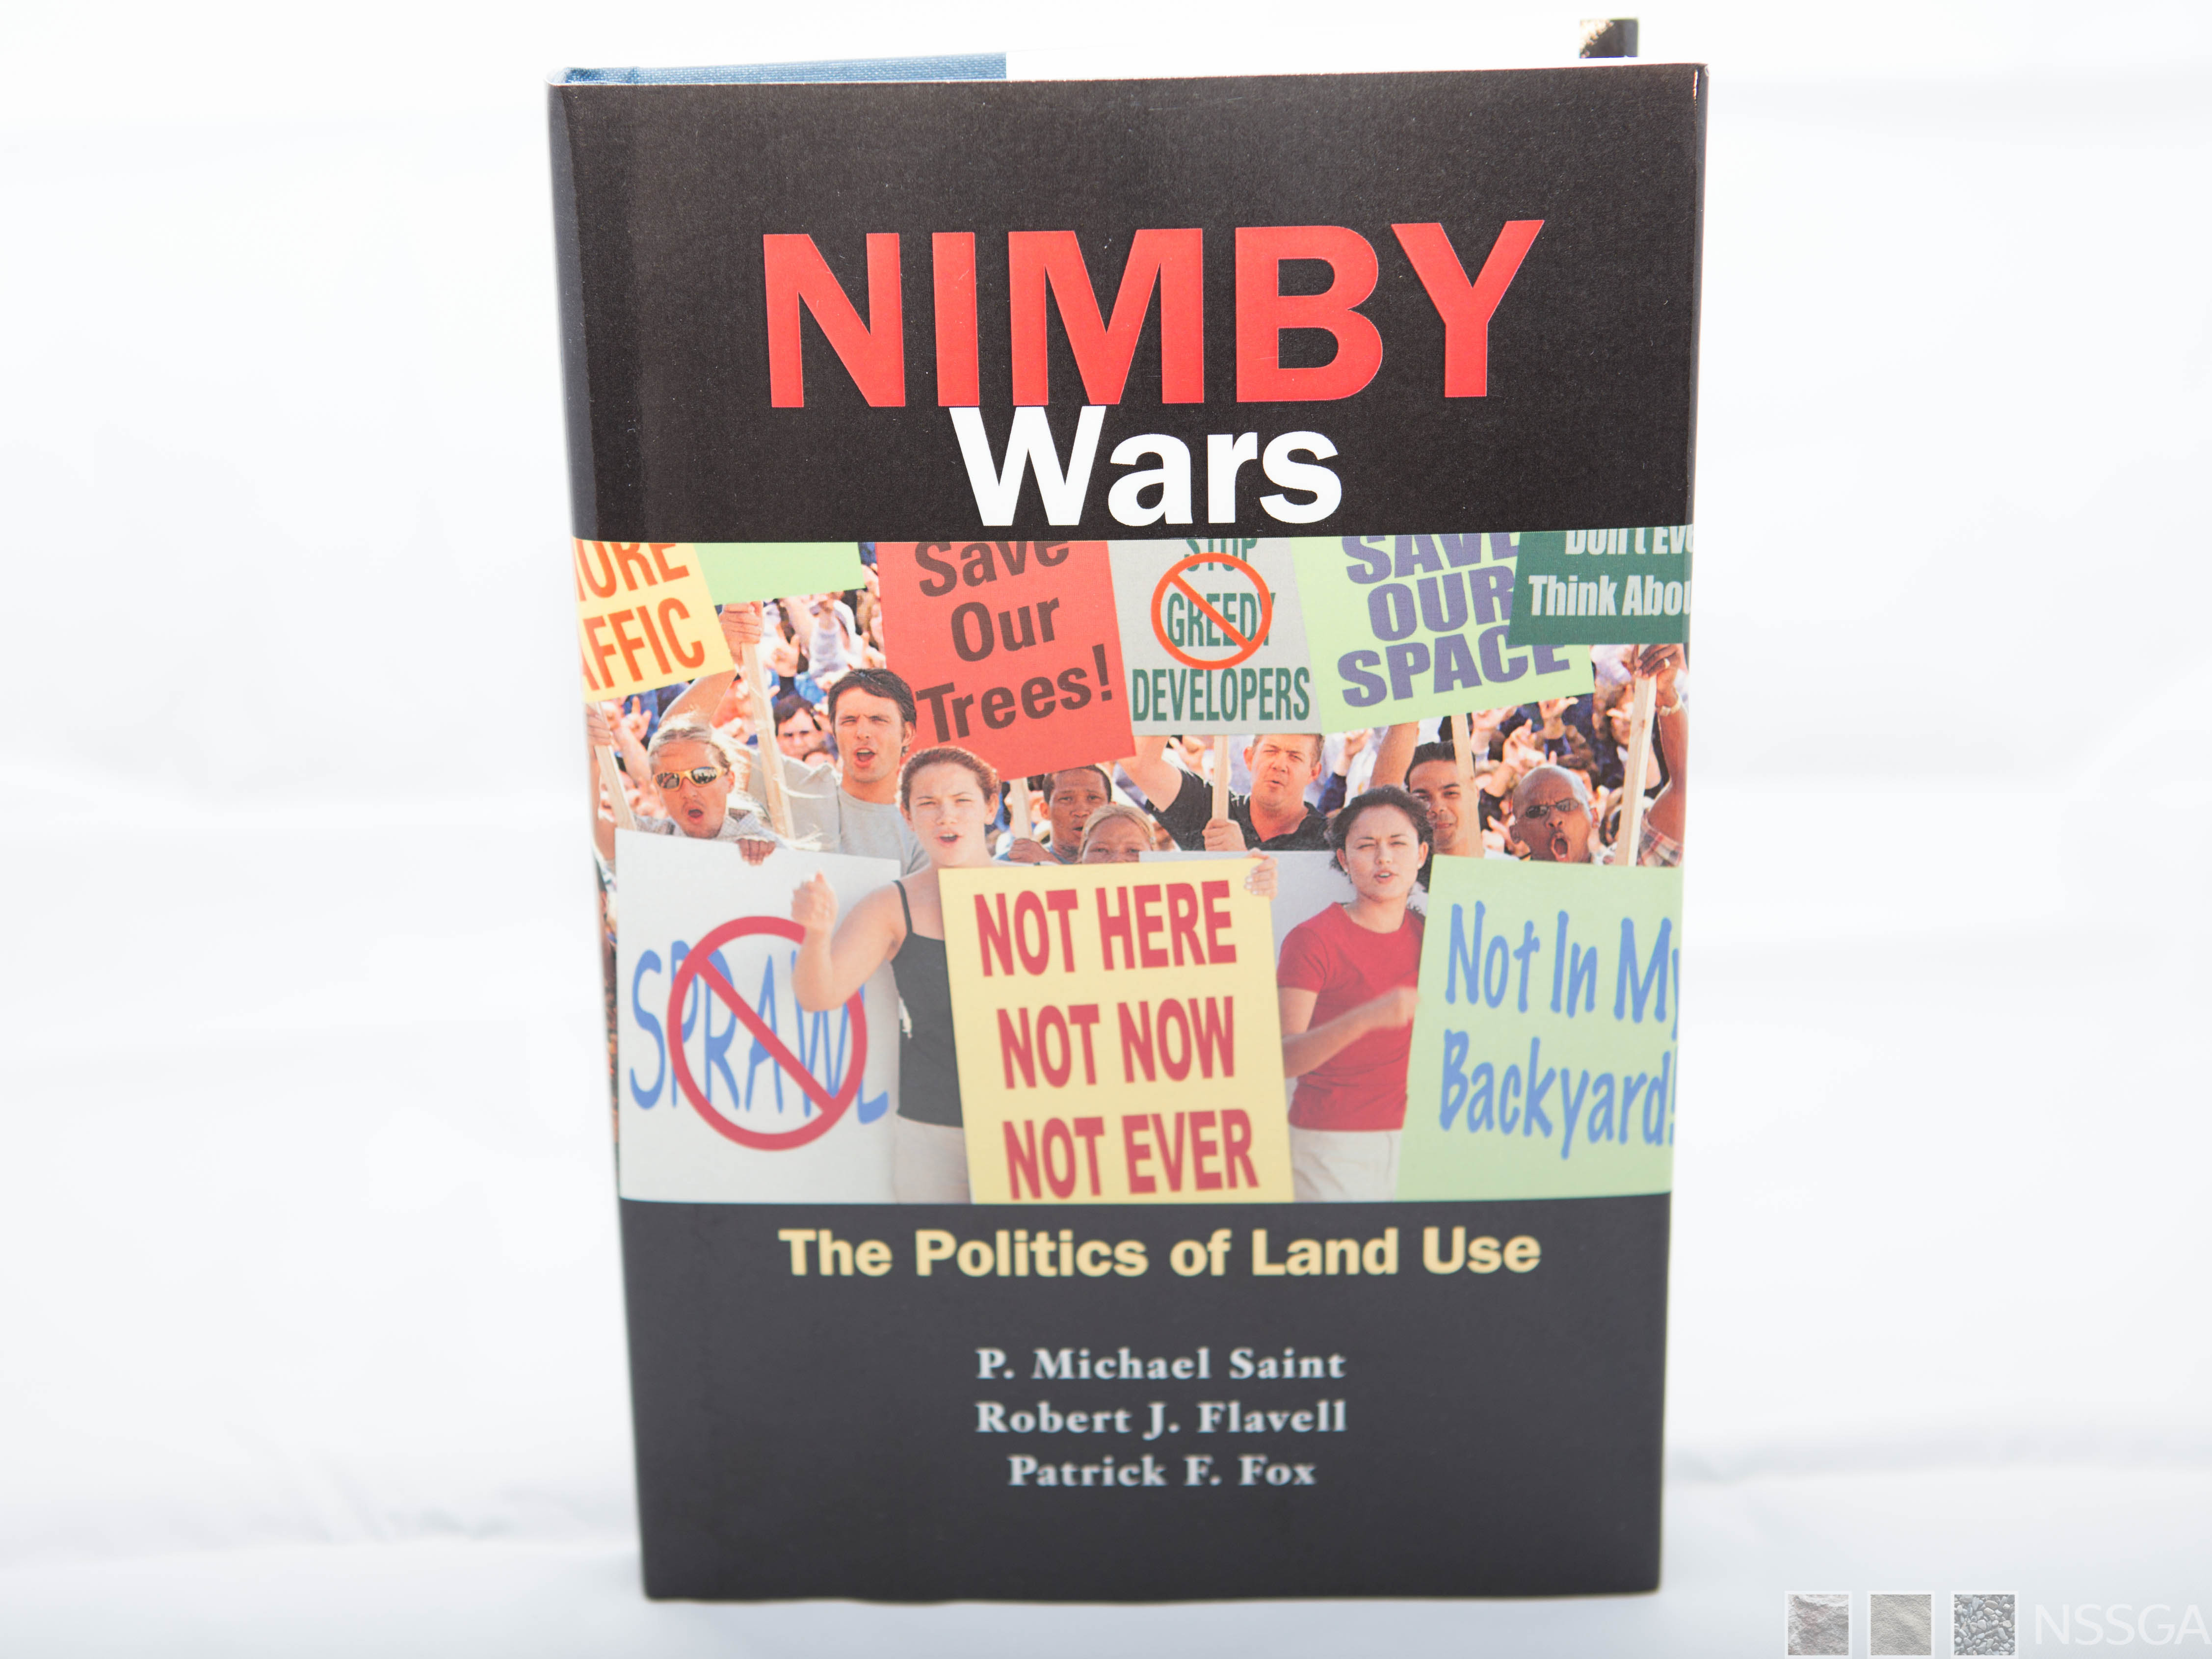 NIMBY Wars: The Politics of Land Use